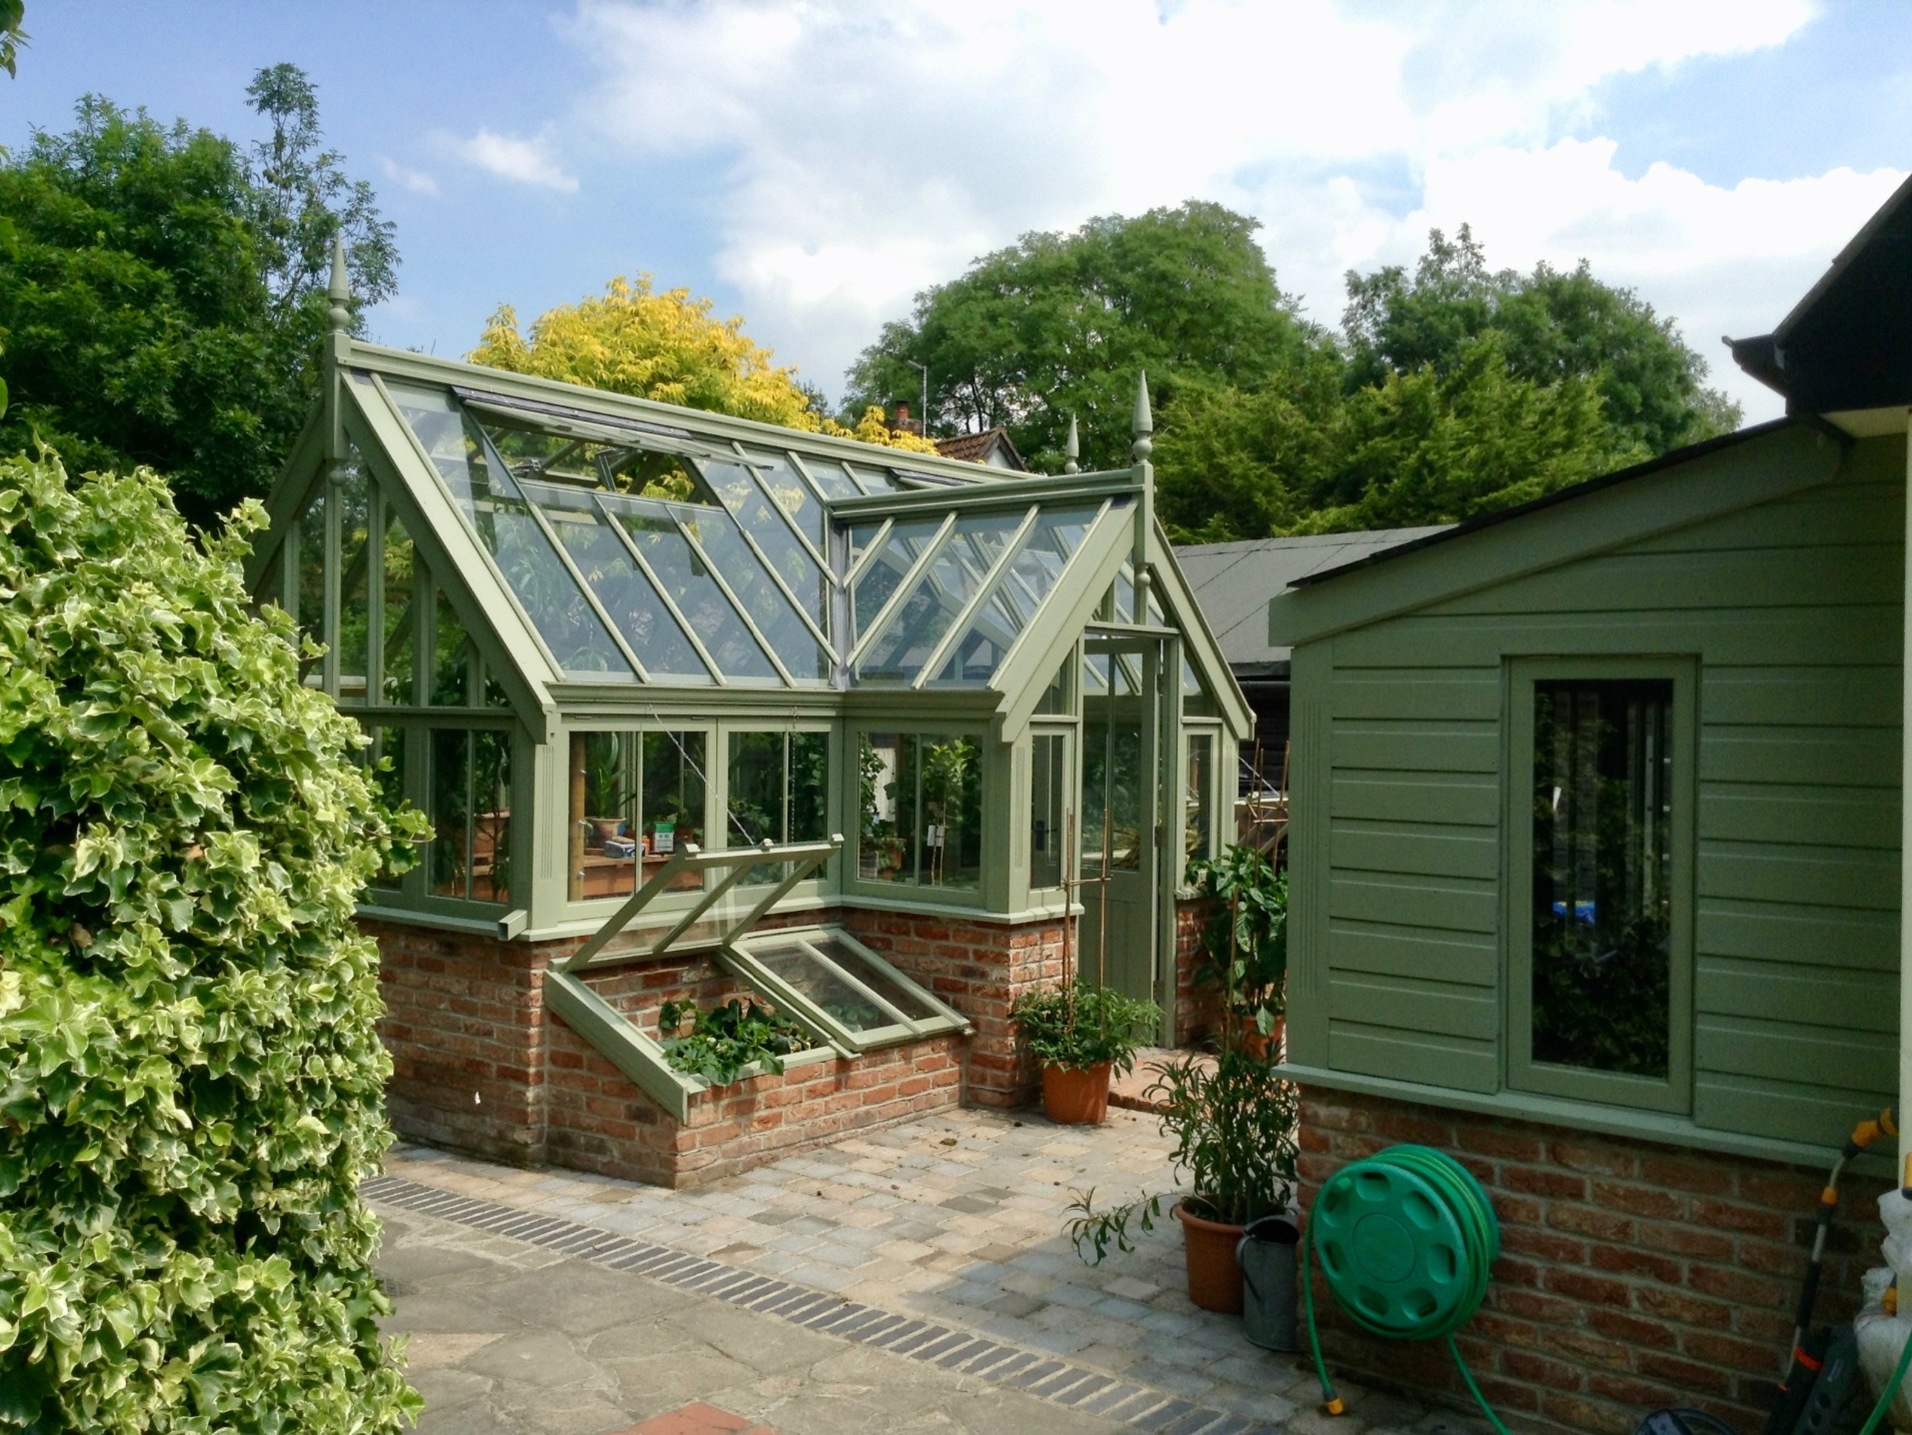 Greenhouse and adjacent potting shed